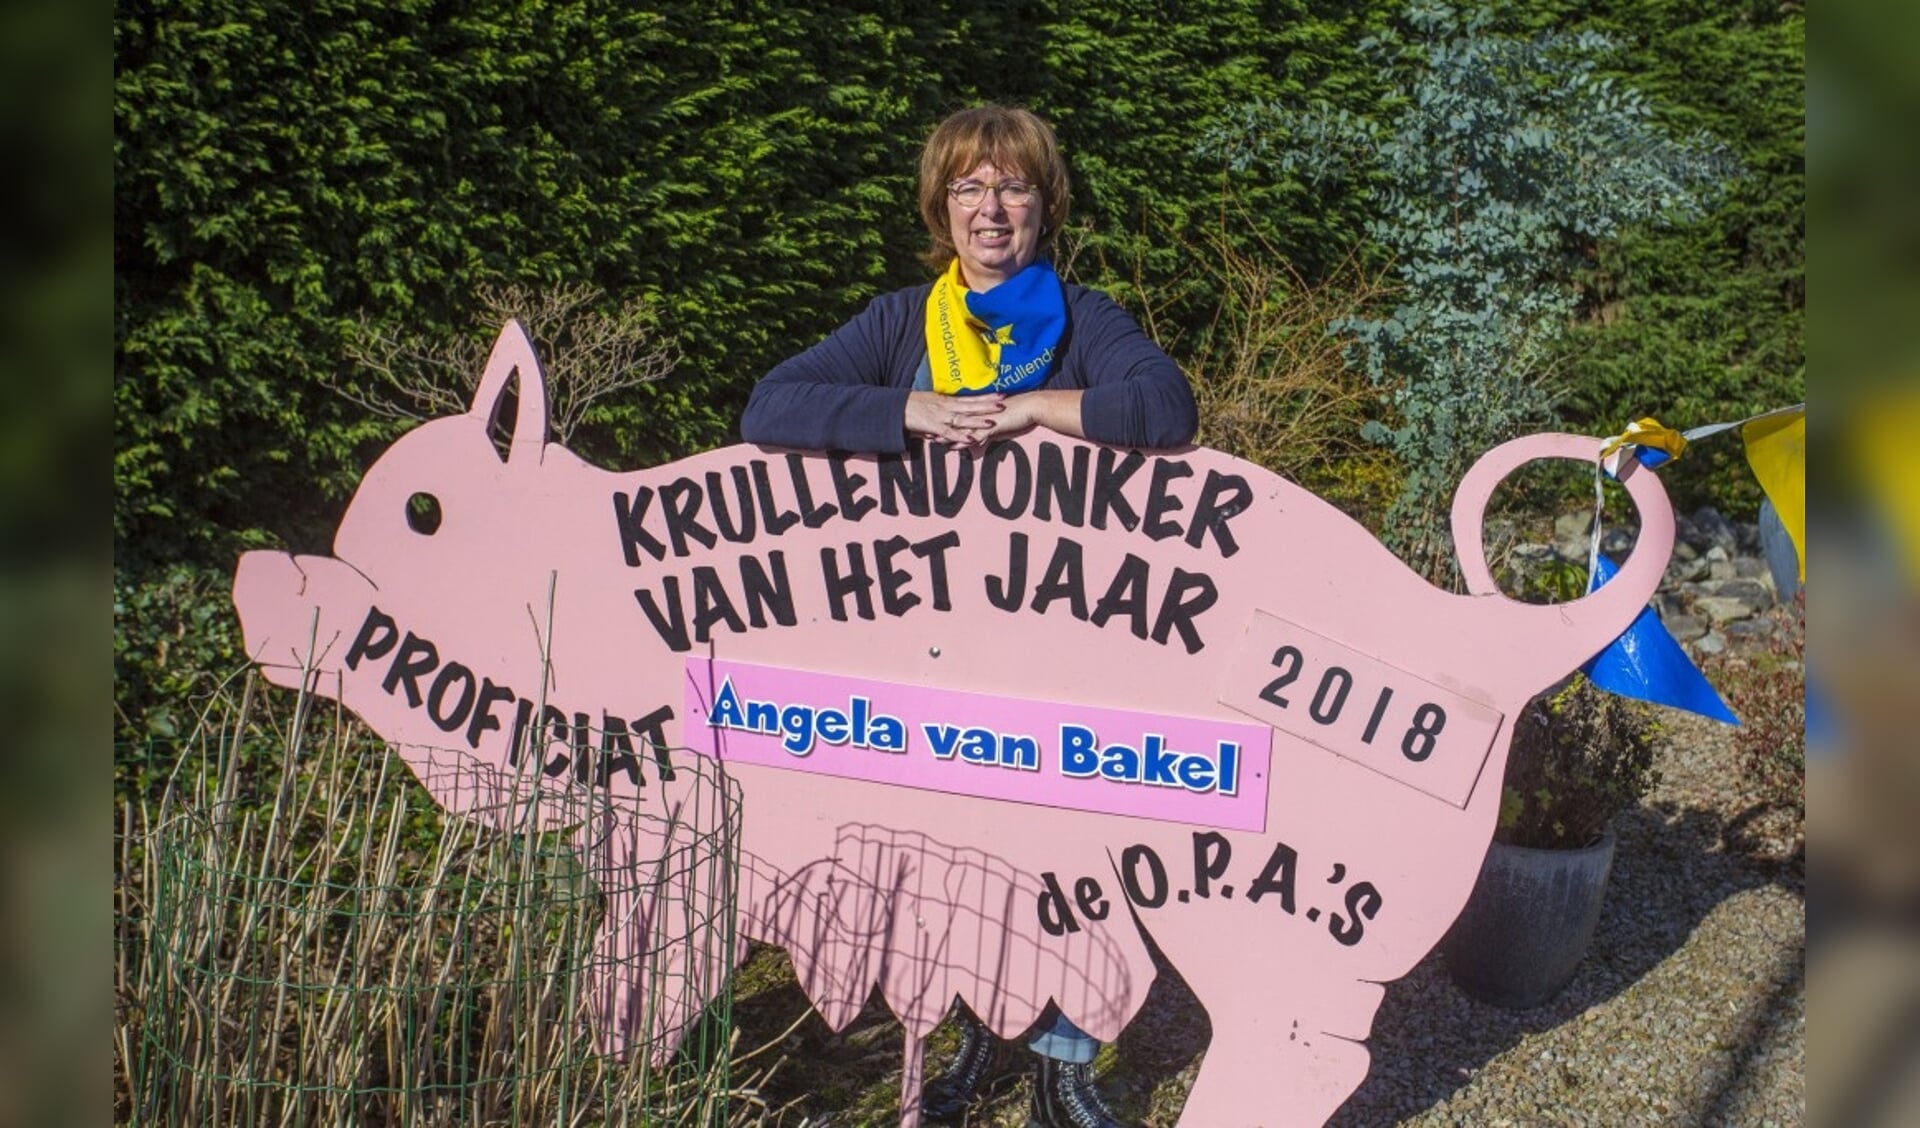 Krullendonker van het jaar: Angela van Bakel-van Gogh